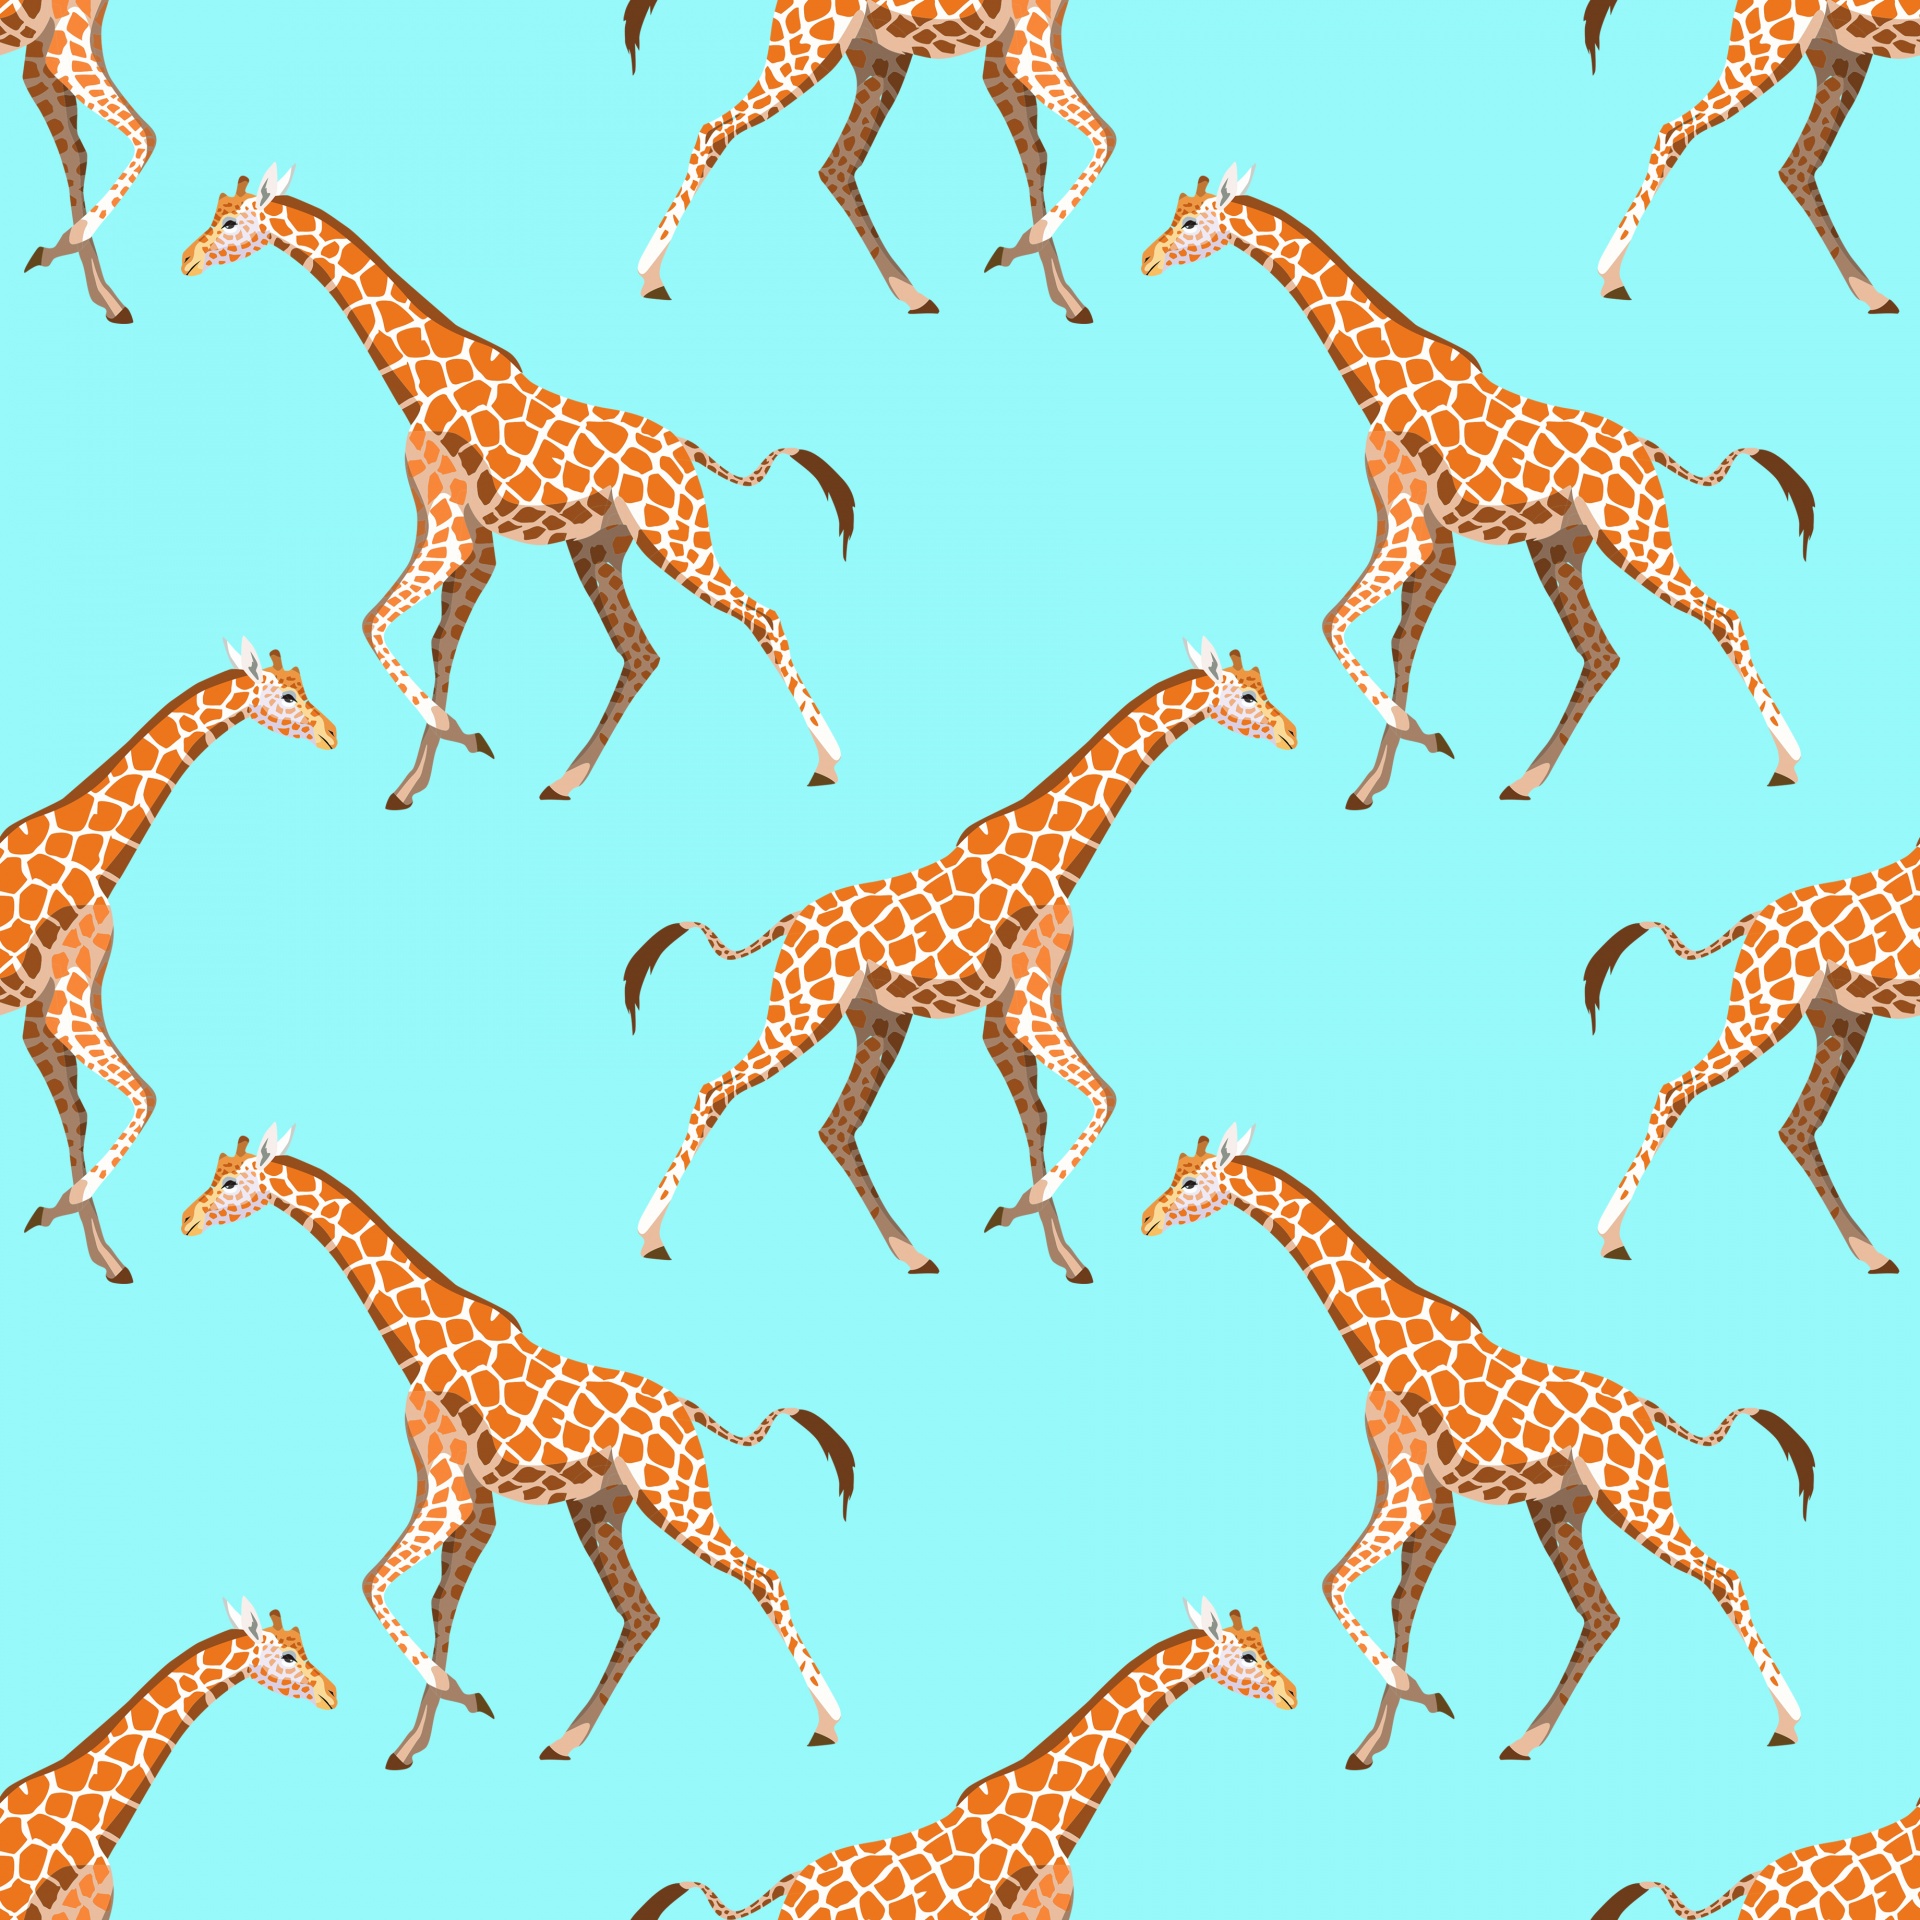 Giraffe background wallpaper seamless illustration